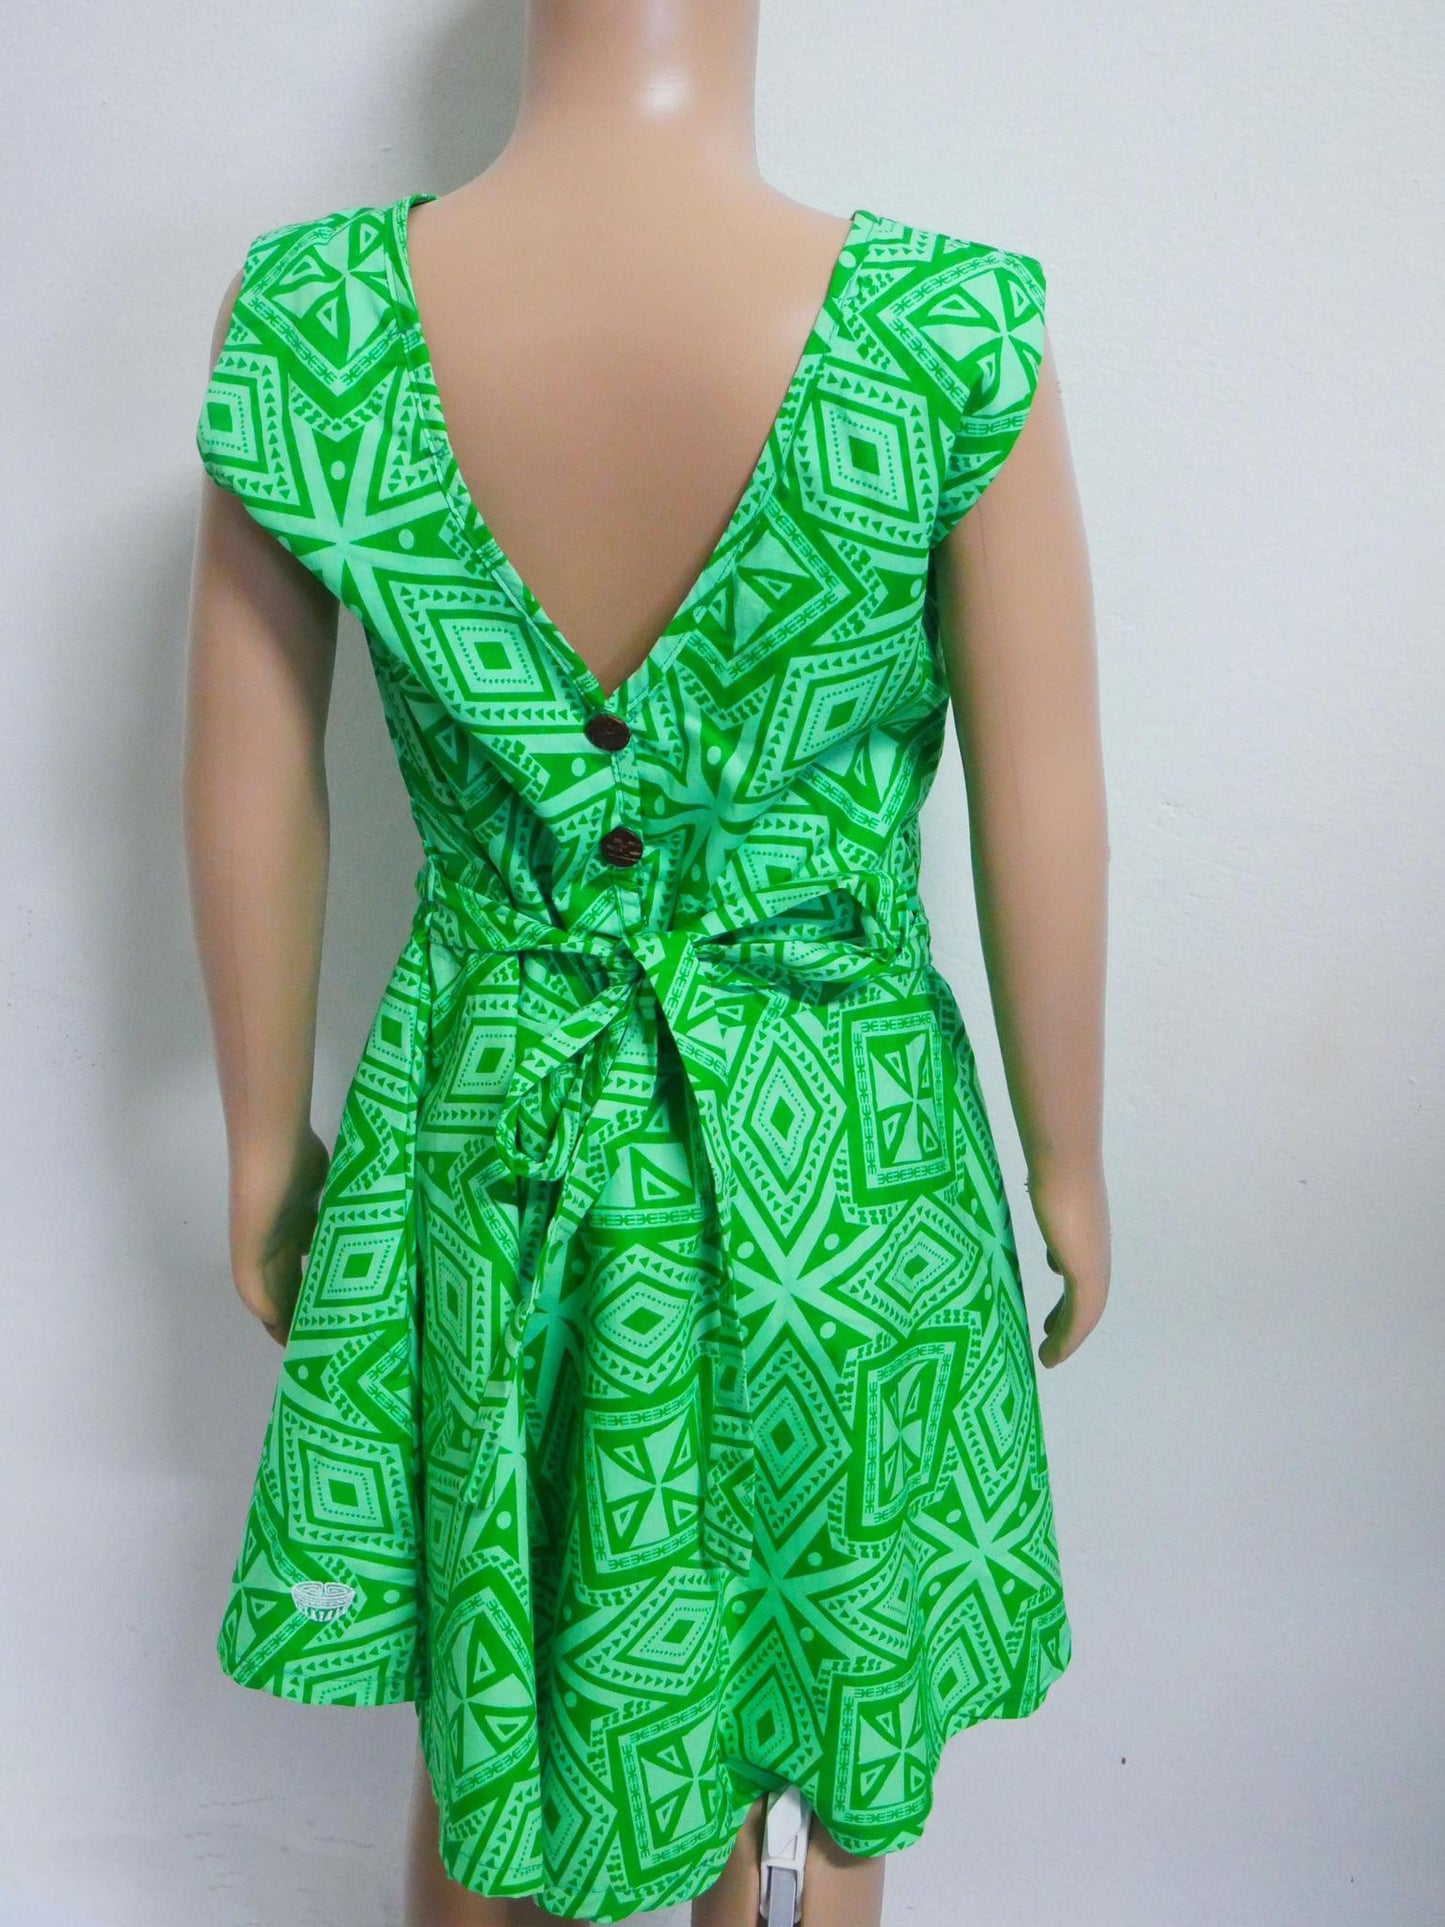 Tanoa Samoa Girl's Green Dress (Lime)